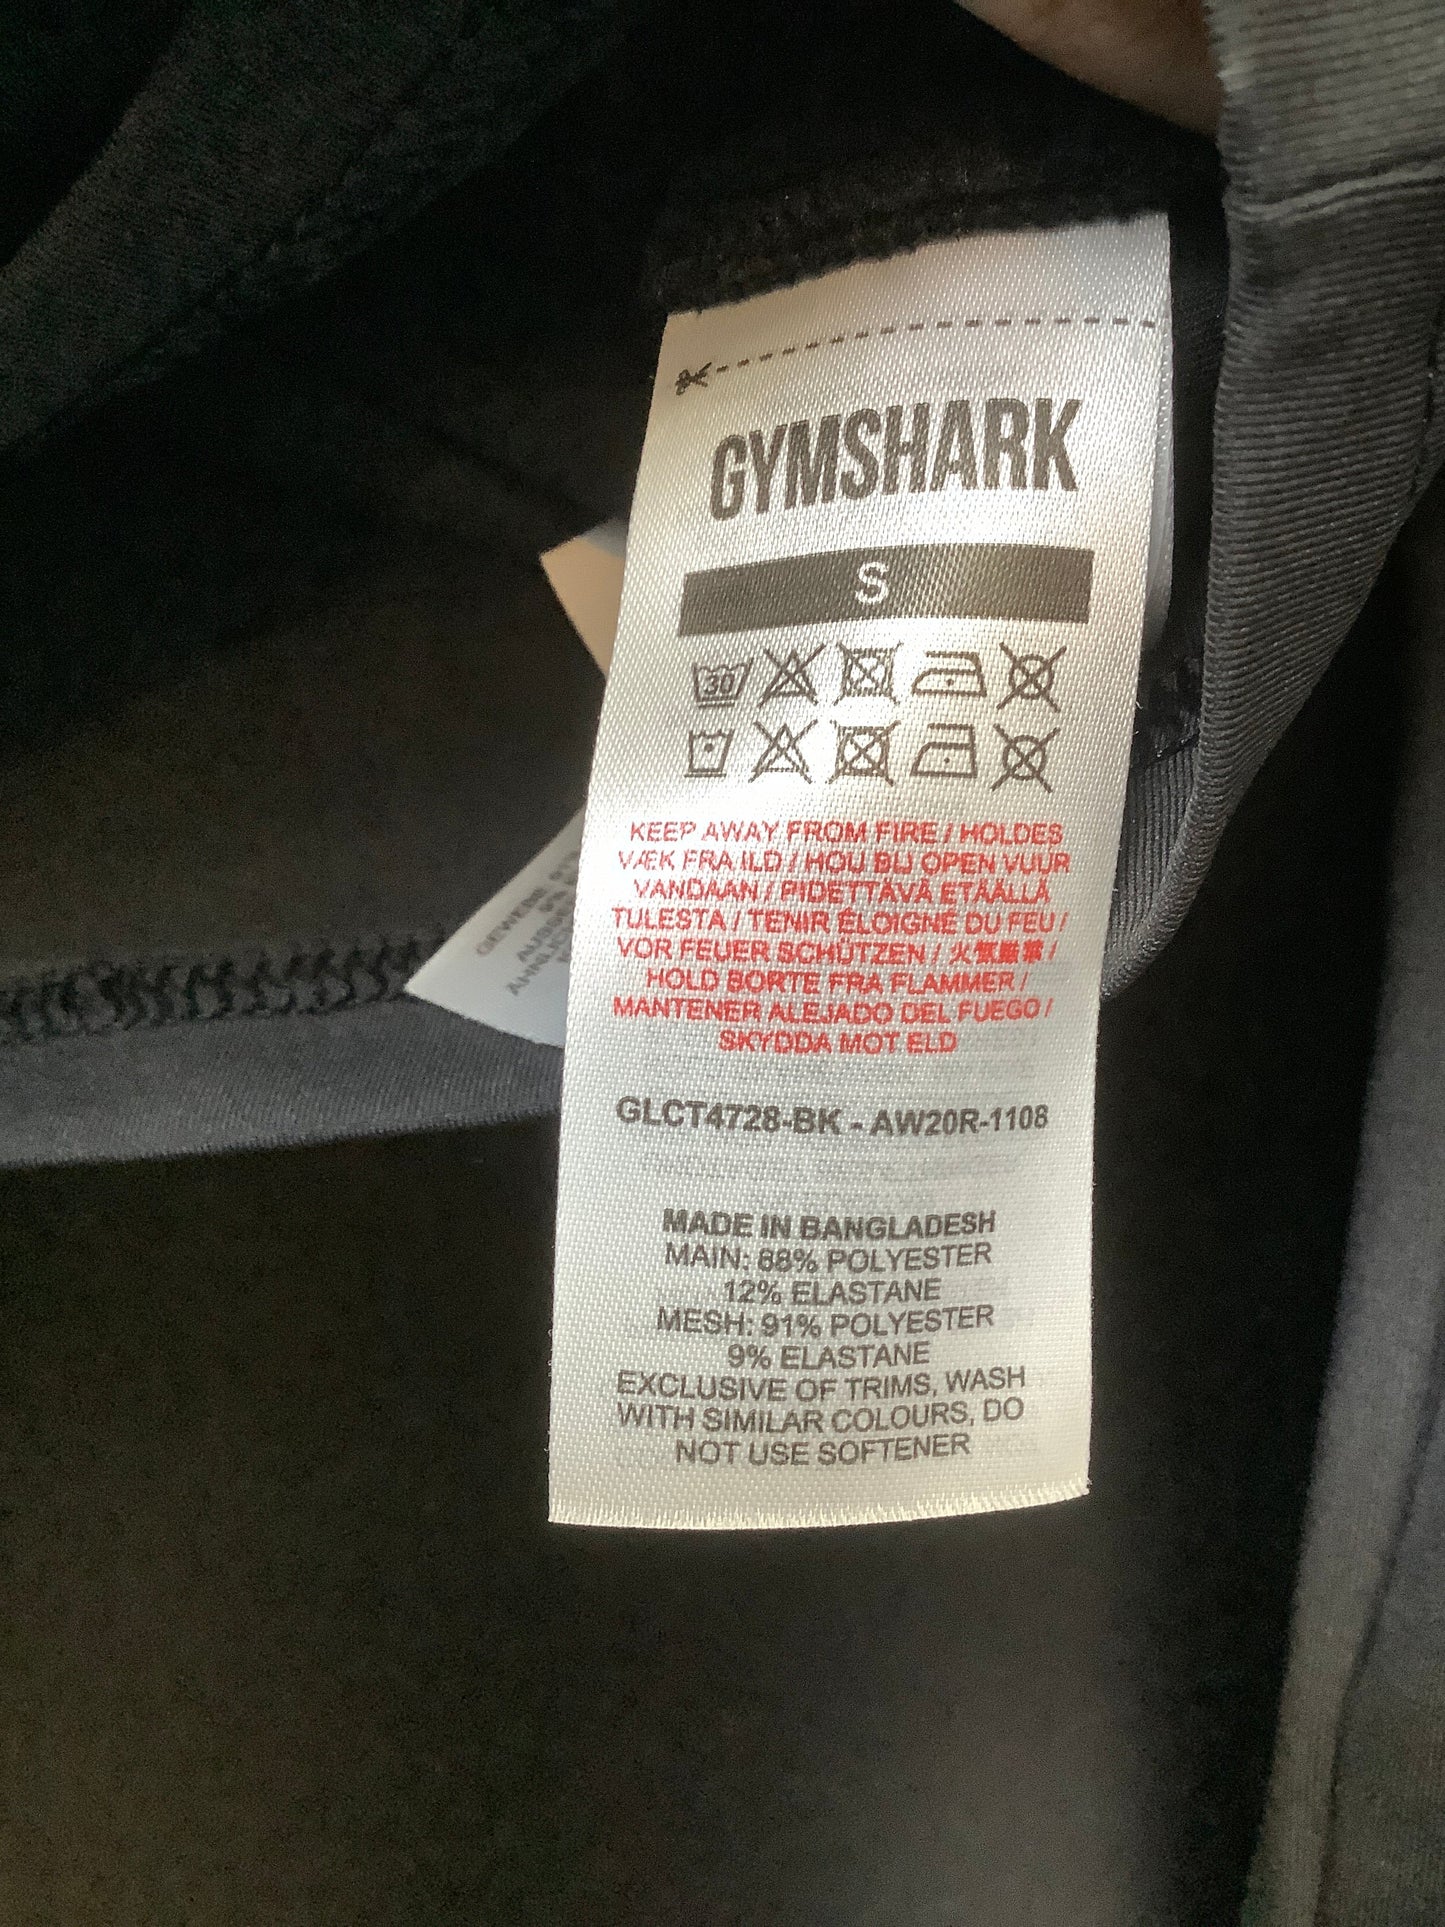 Black Athletic Top Long Sleeve Crewneck Gym Shark, Size S